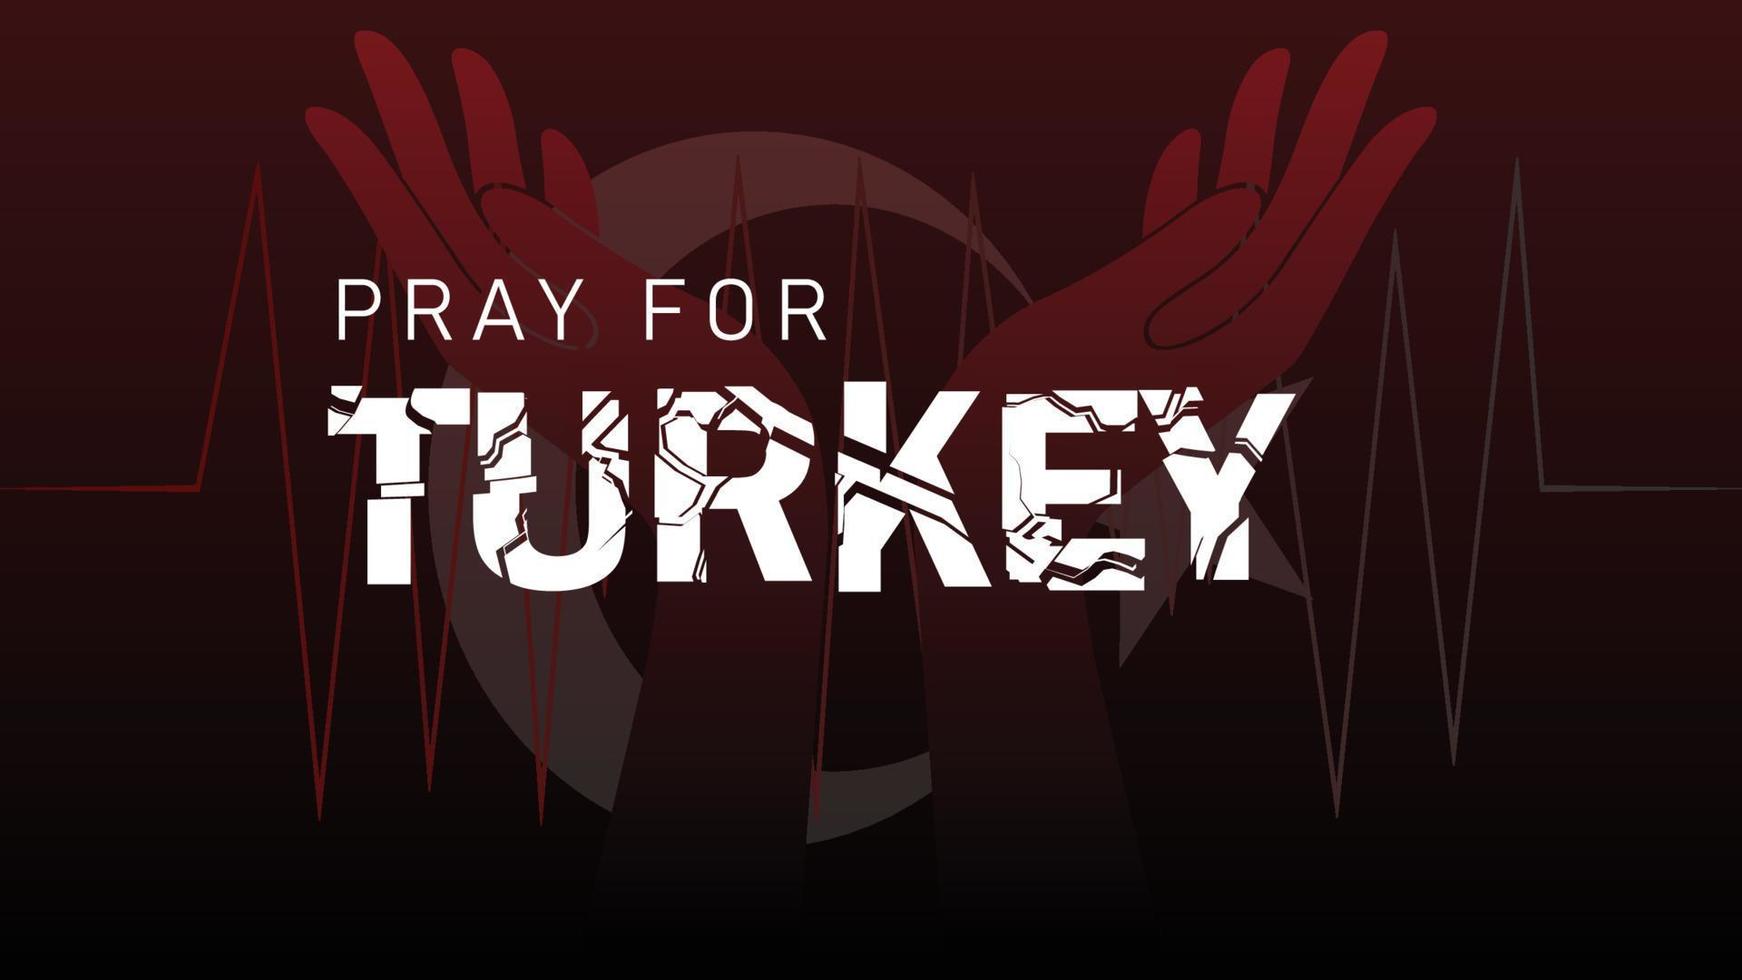 Turkey earthquake crisis, broken Turkey text, hands praying illustration vector